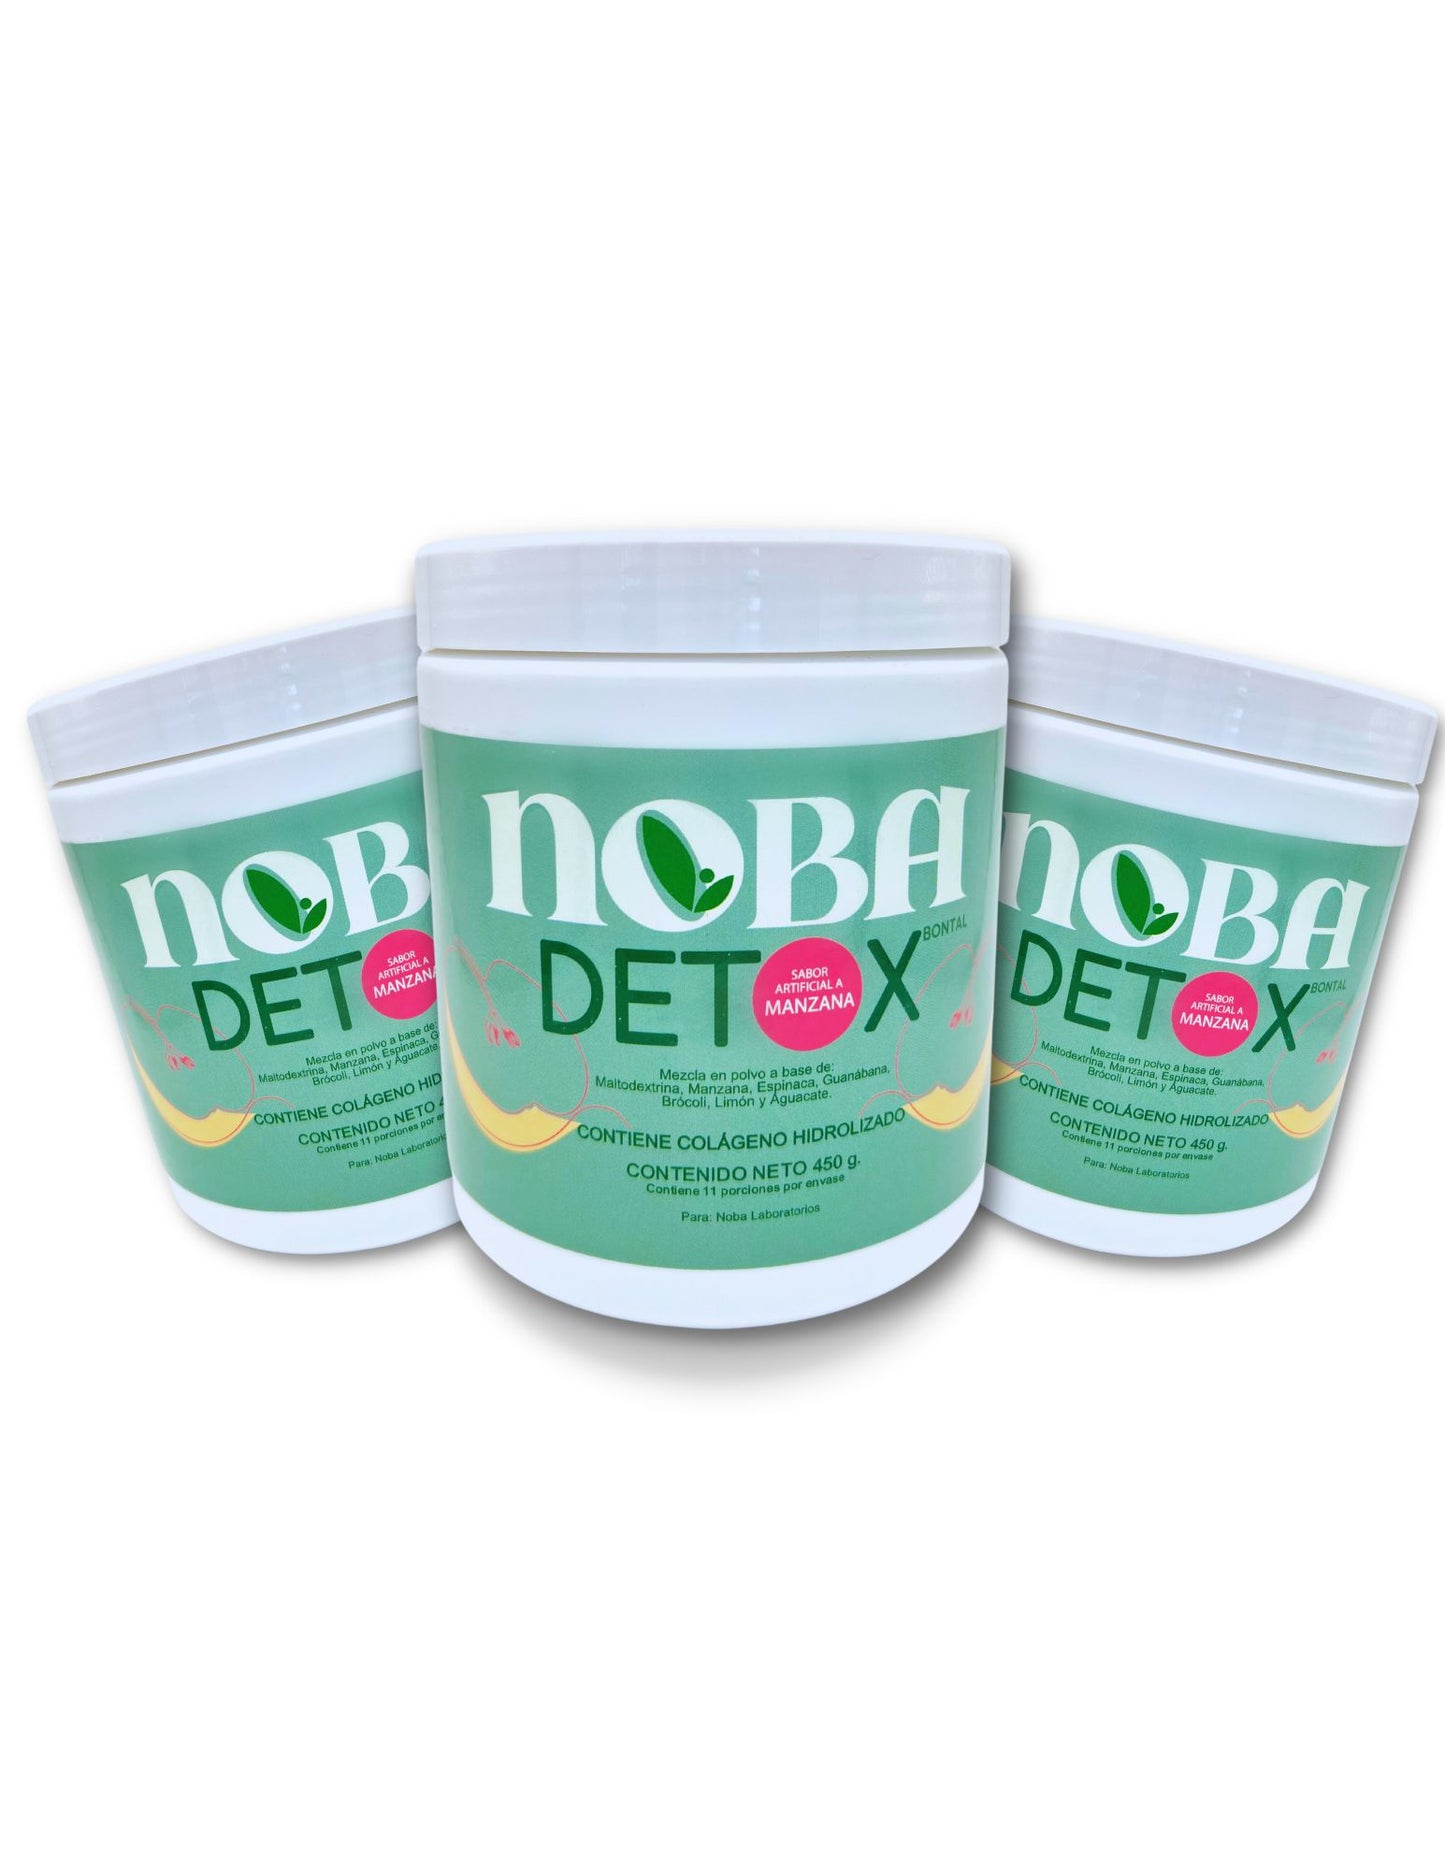 3 Noba detox